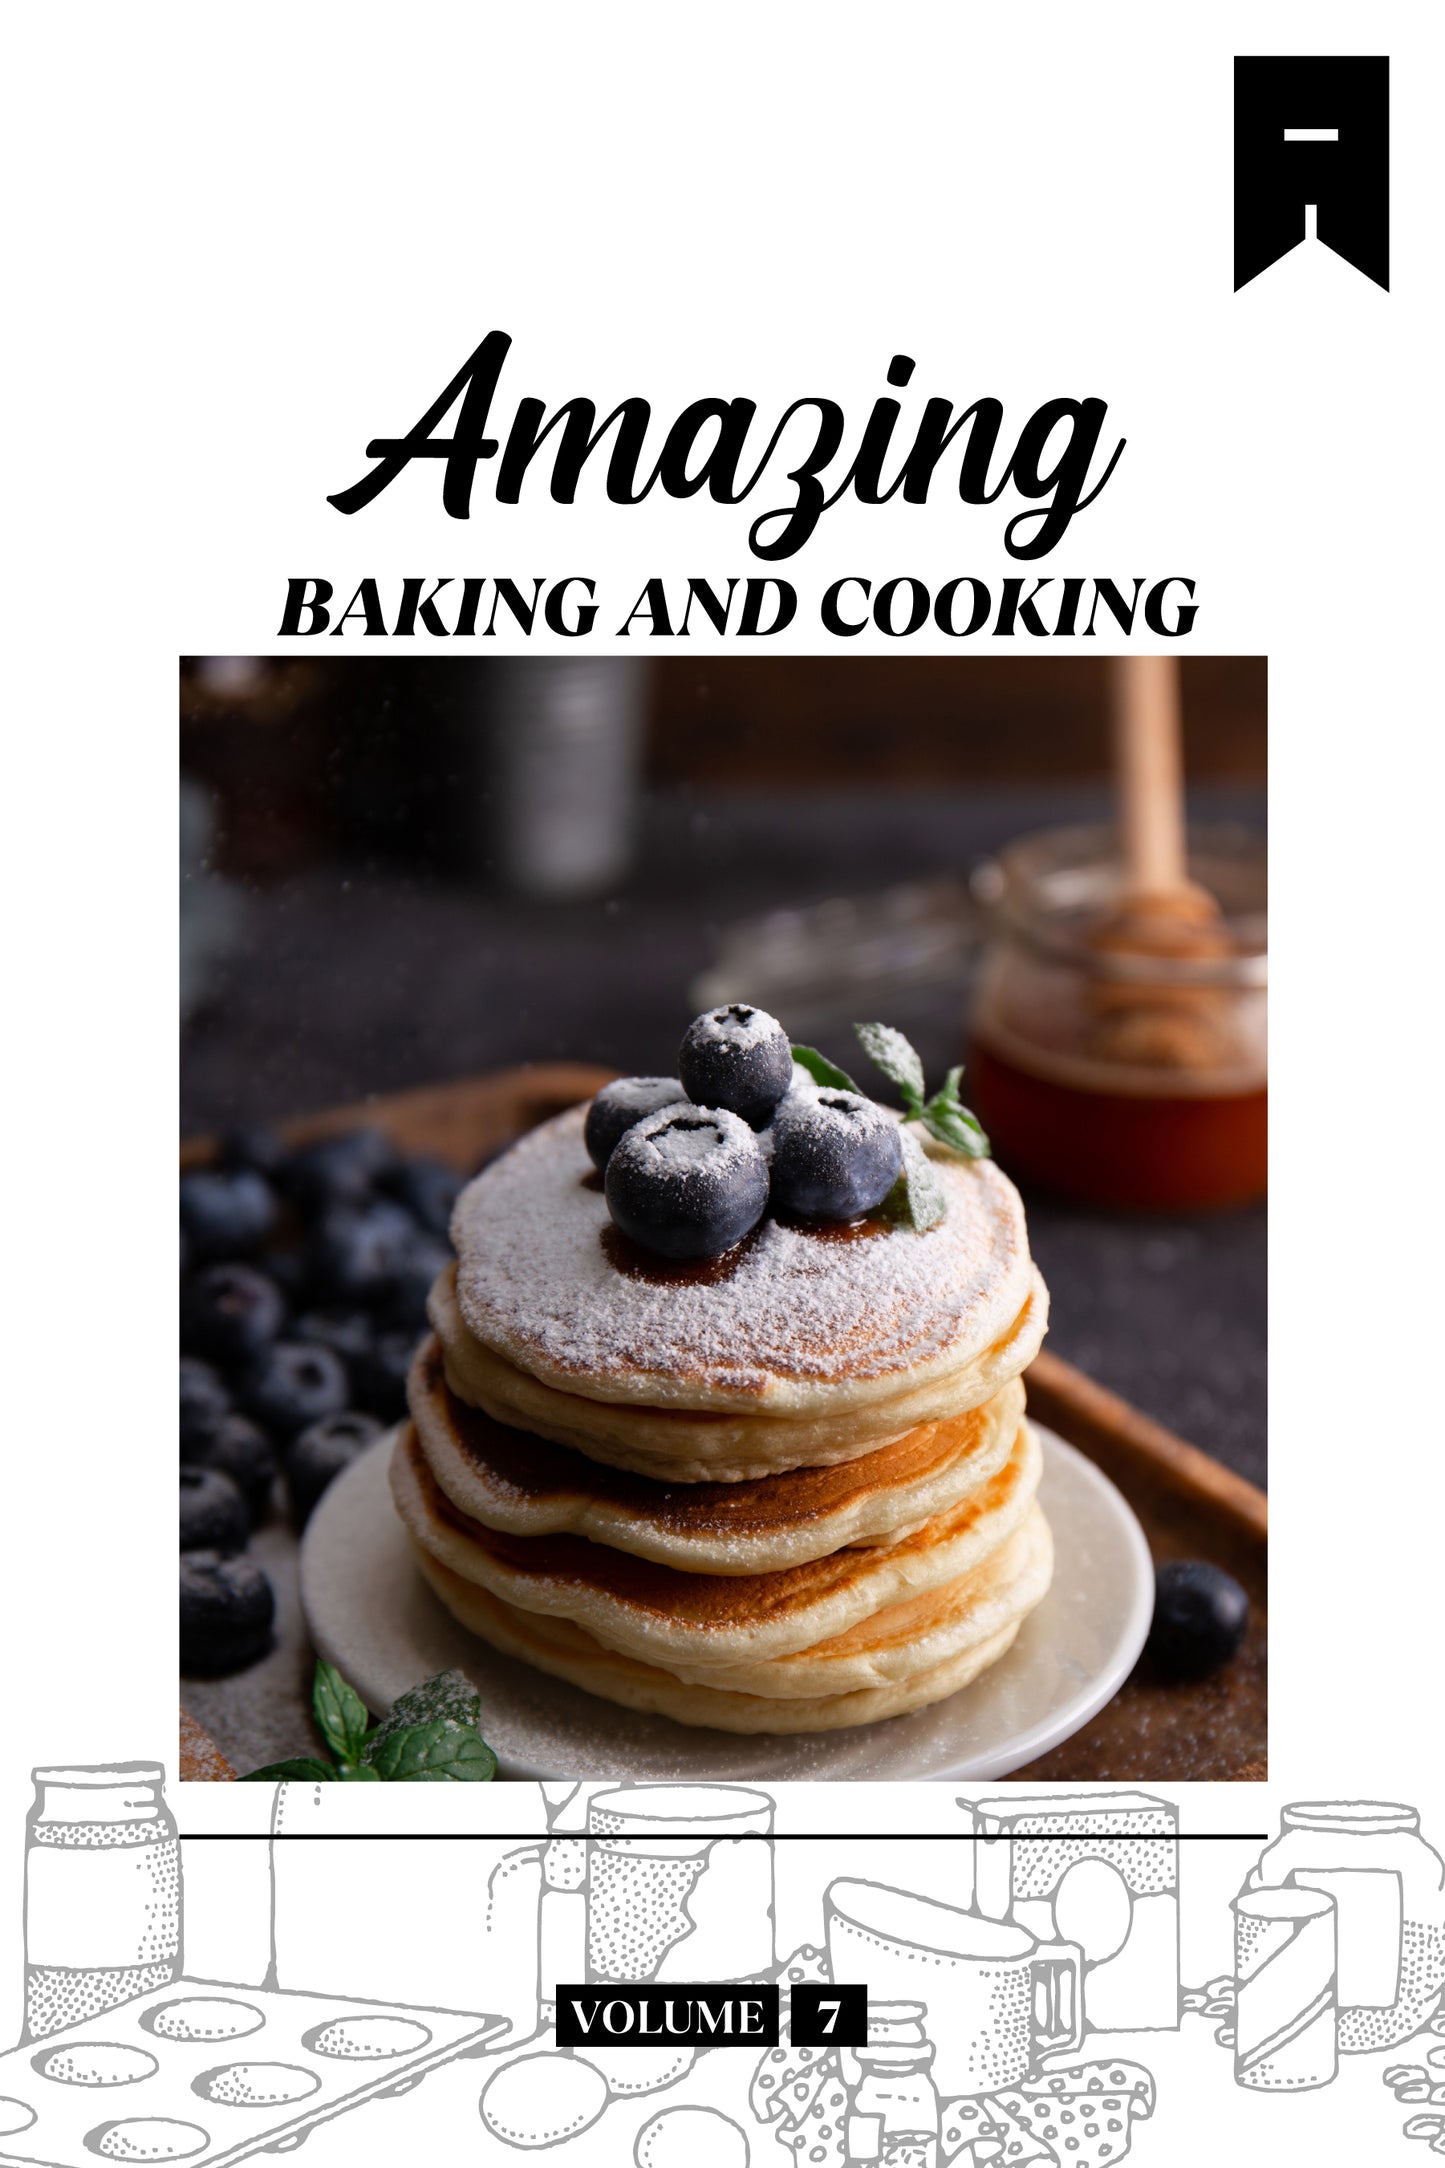 Amazing Baking (Volume 7) - Physical Book